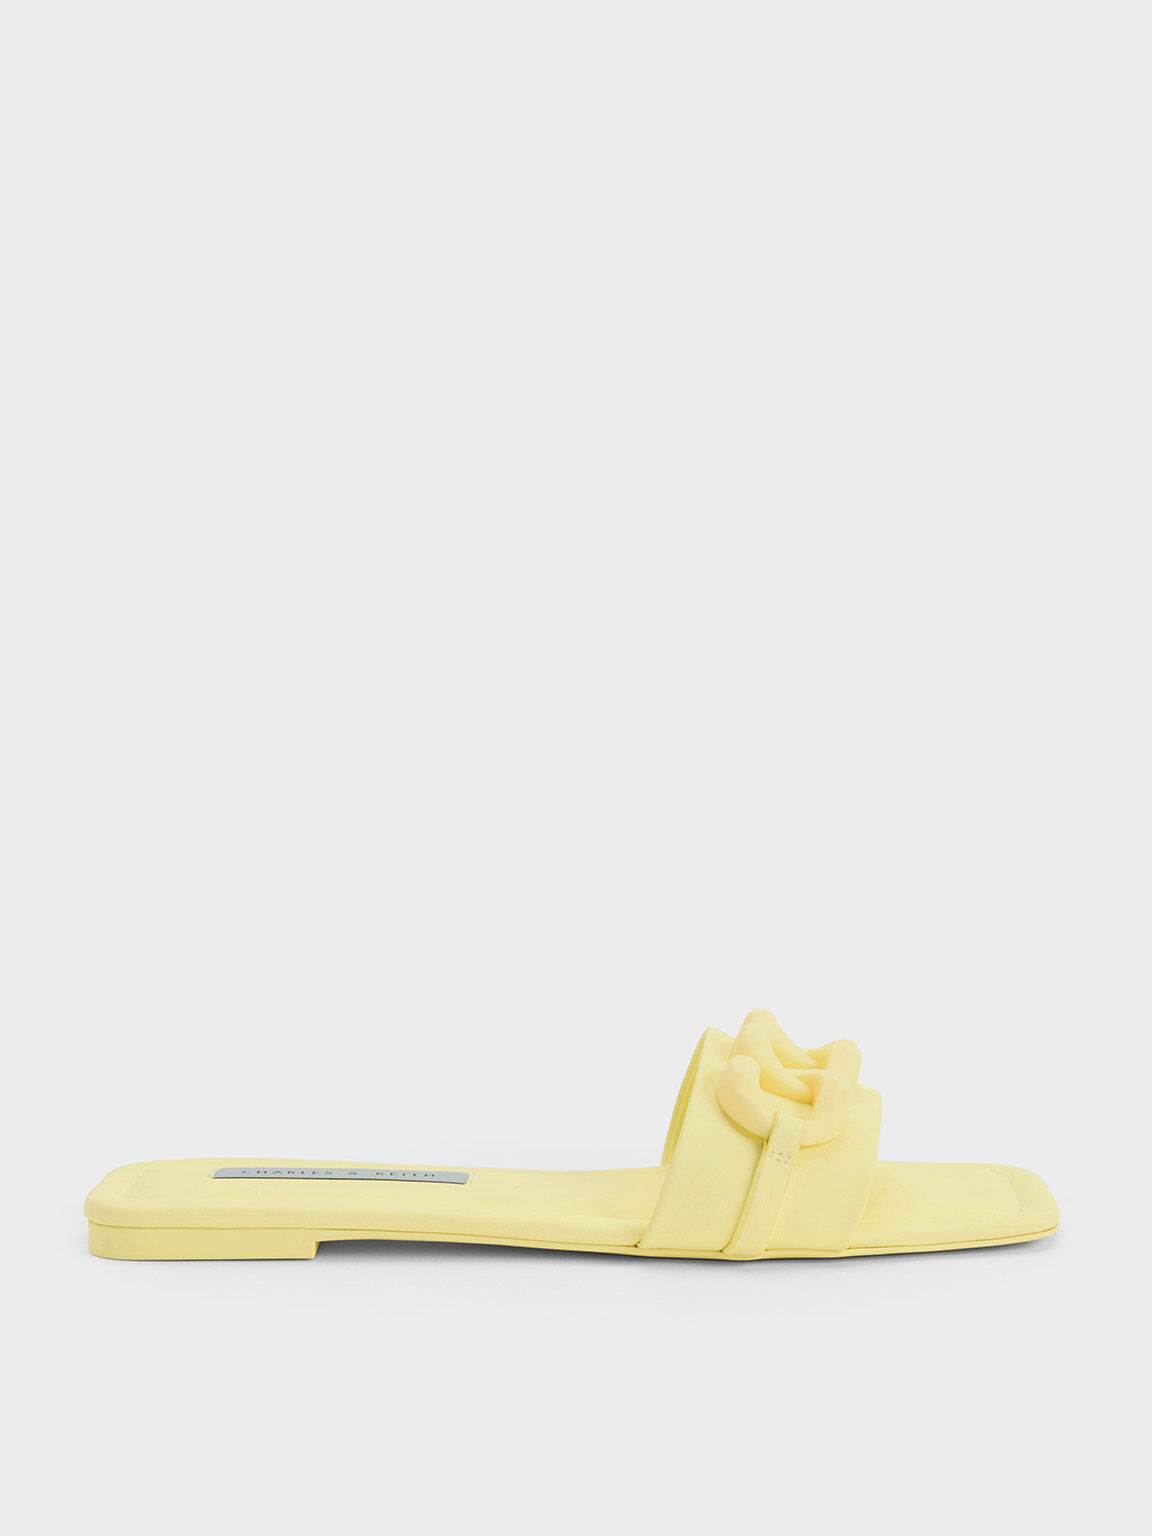 Yellow Sandal Slide Chunky Chain-Link, Yellow, hi-res